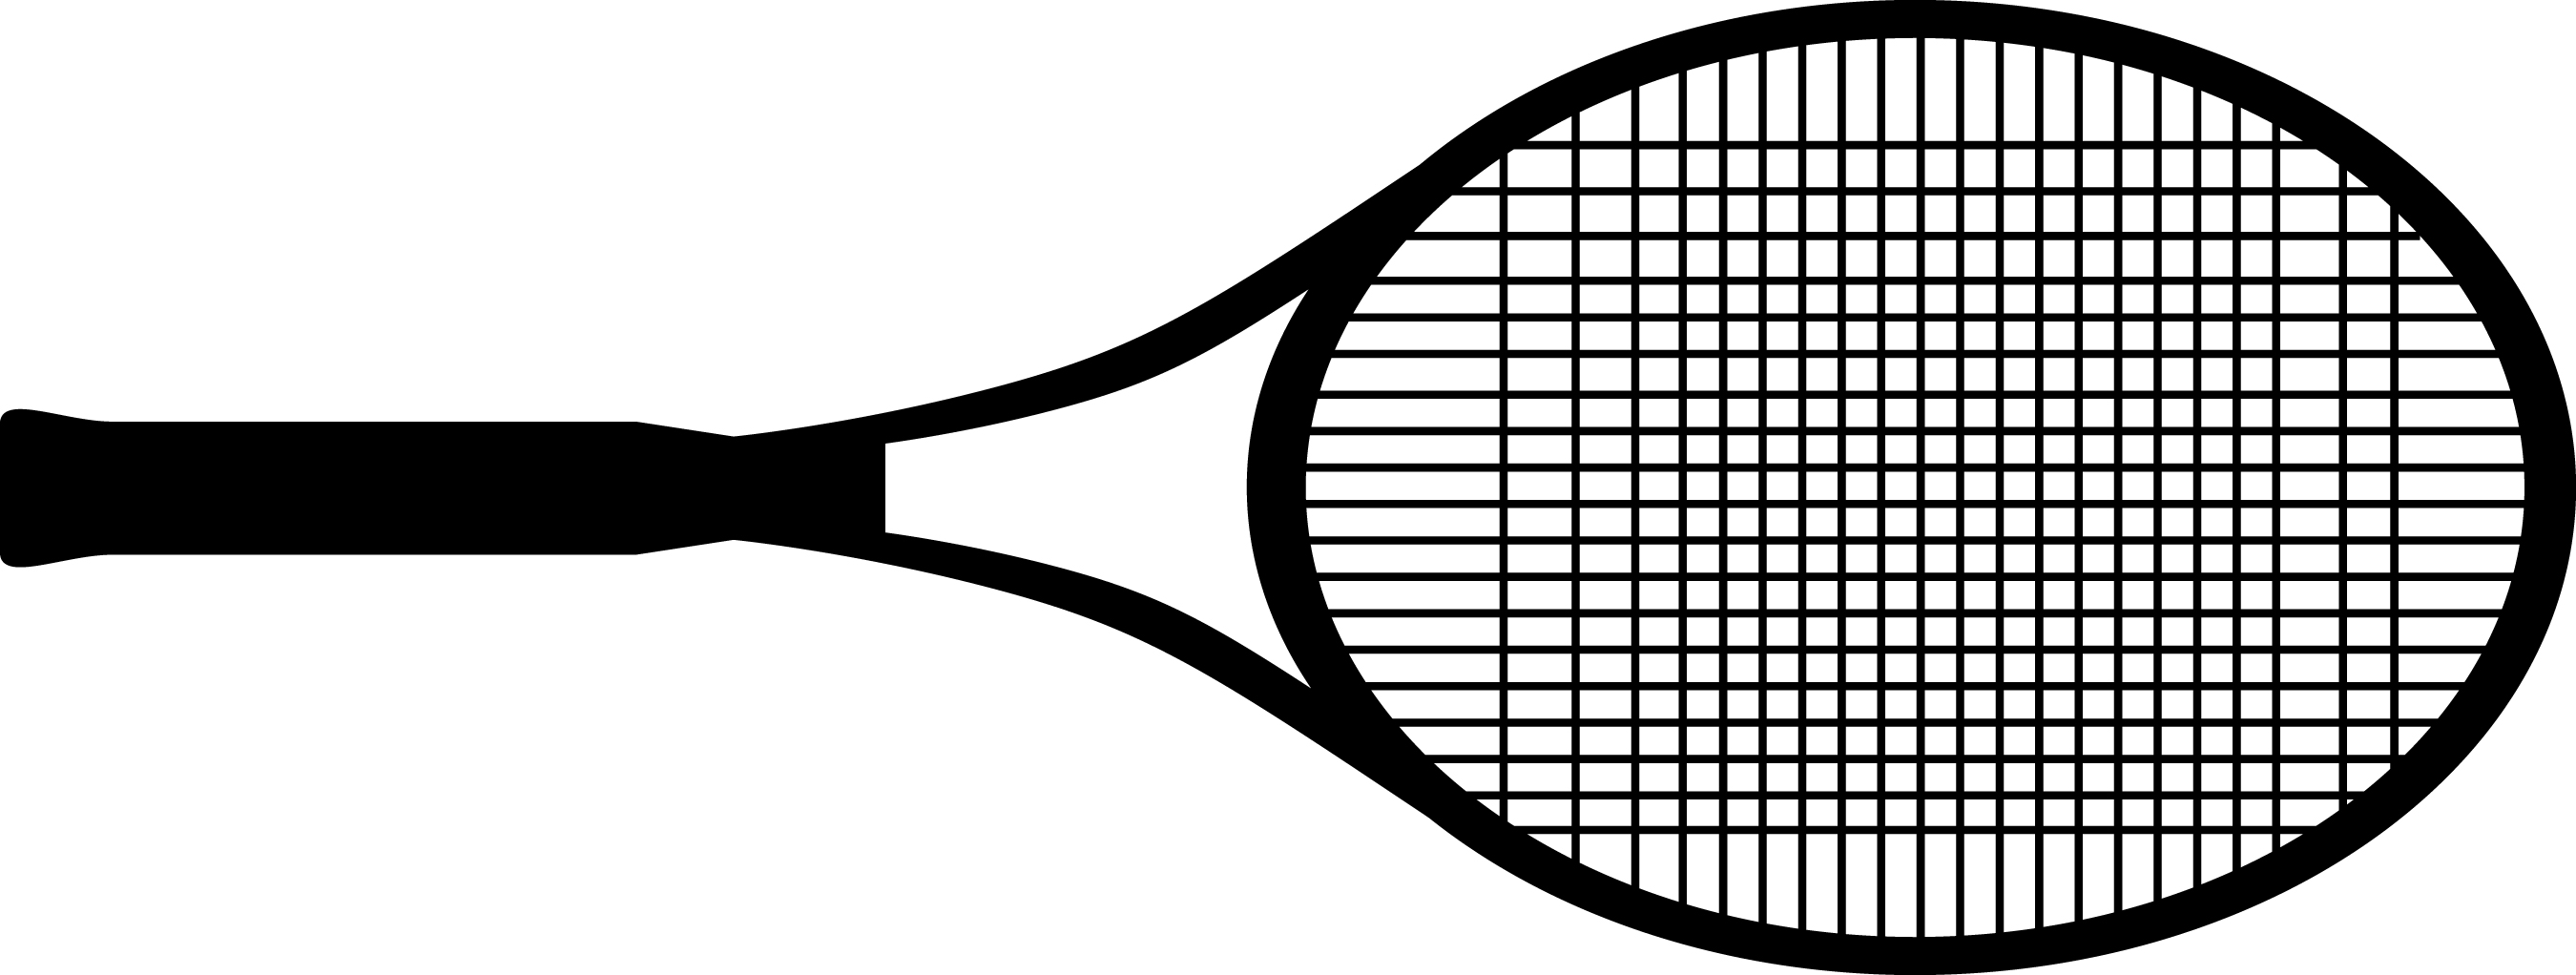 Tennis racket and ball vector